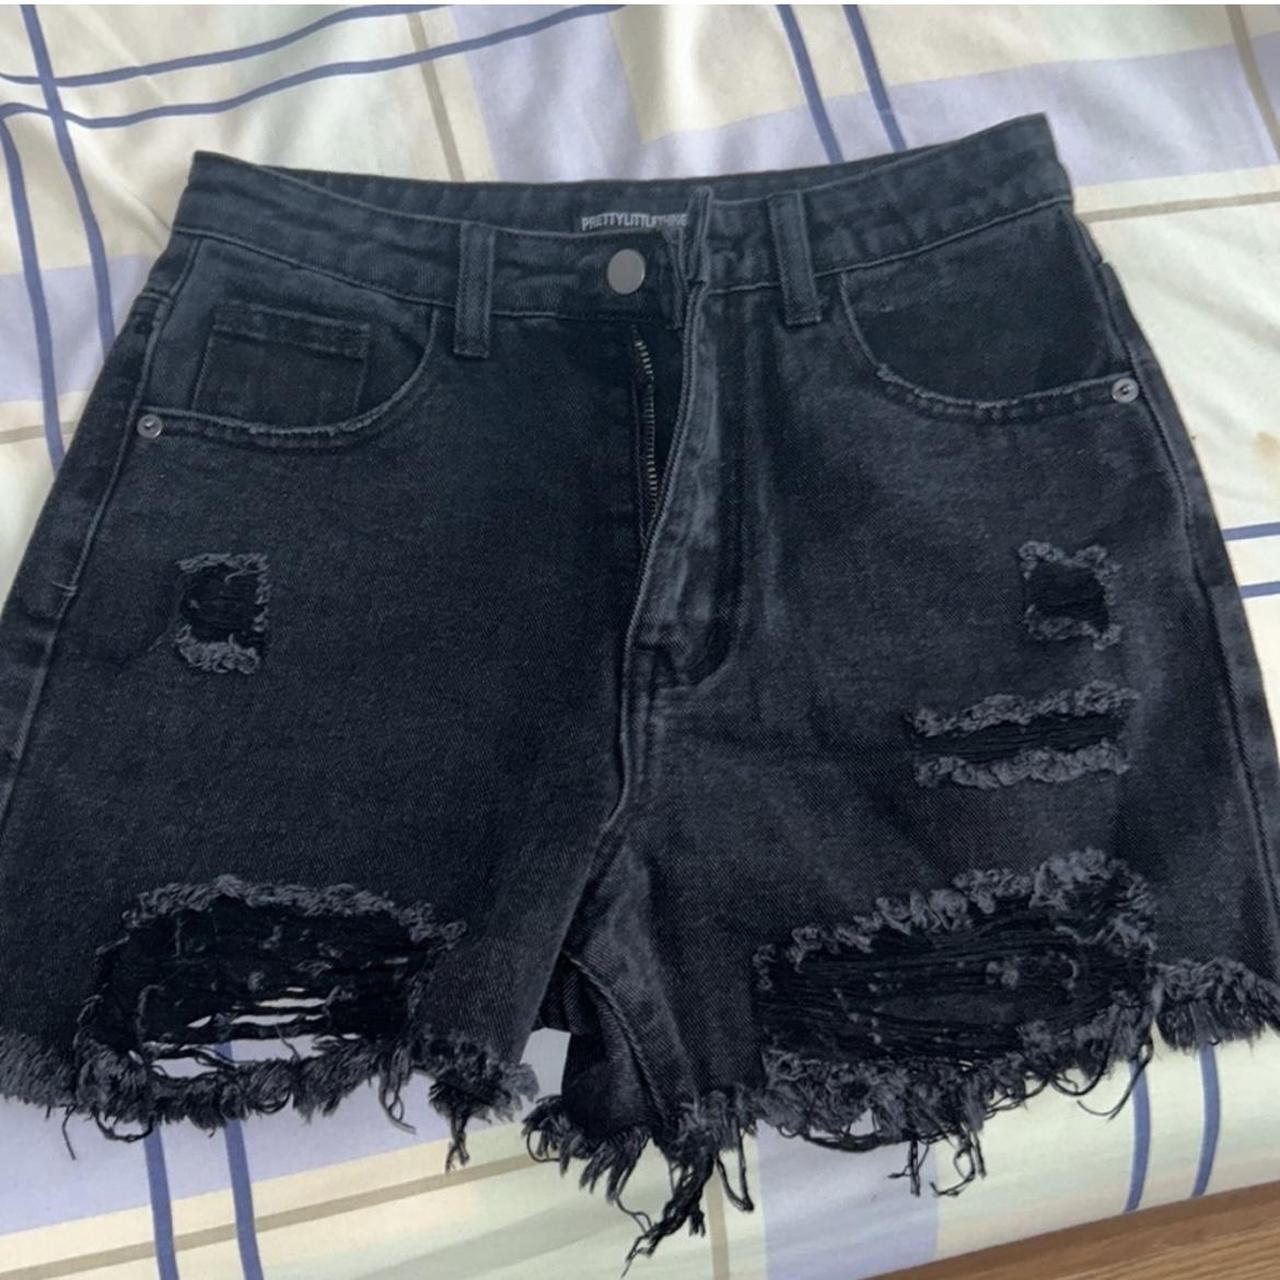 Prettylittlething Washed Black Denim Ripped Shorts